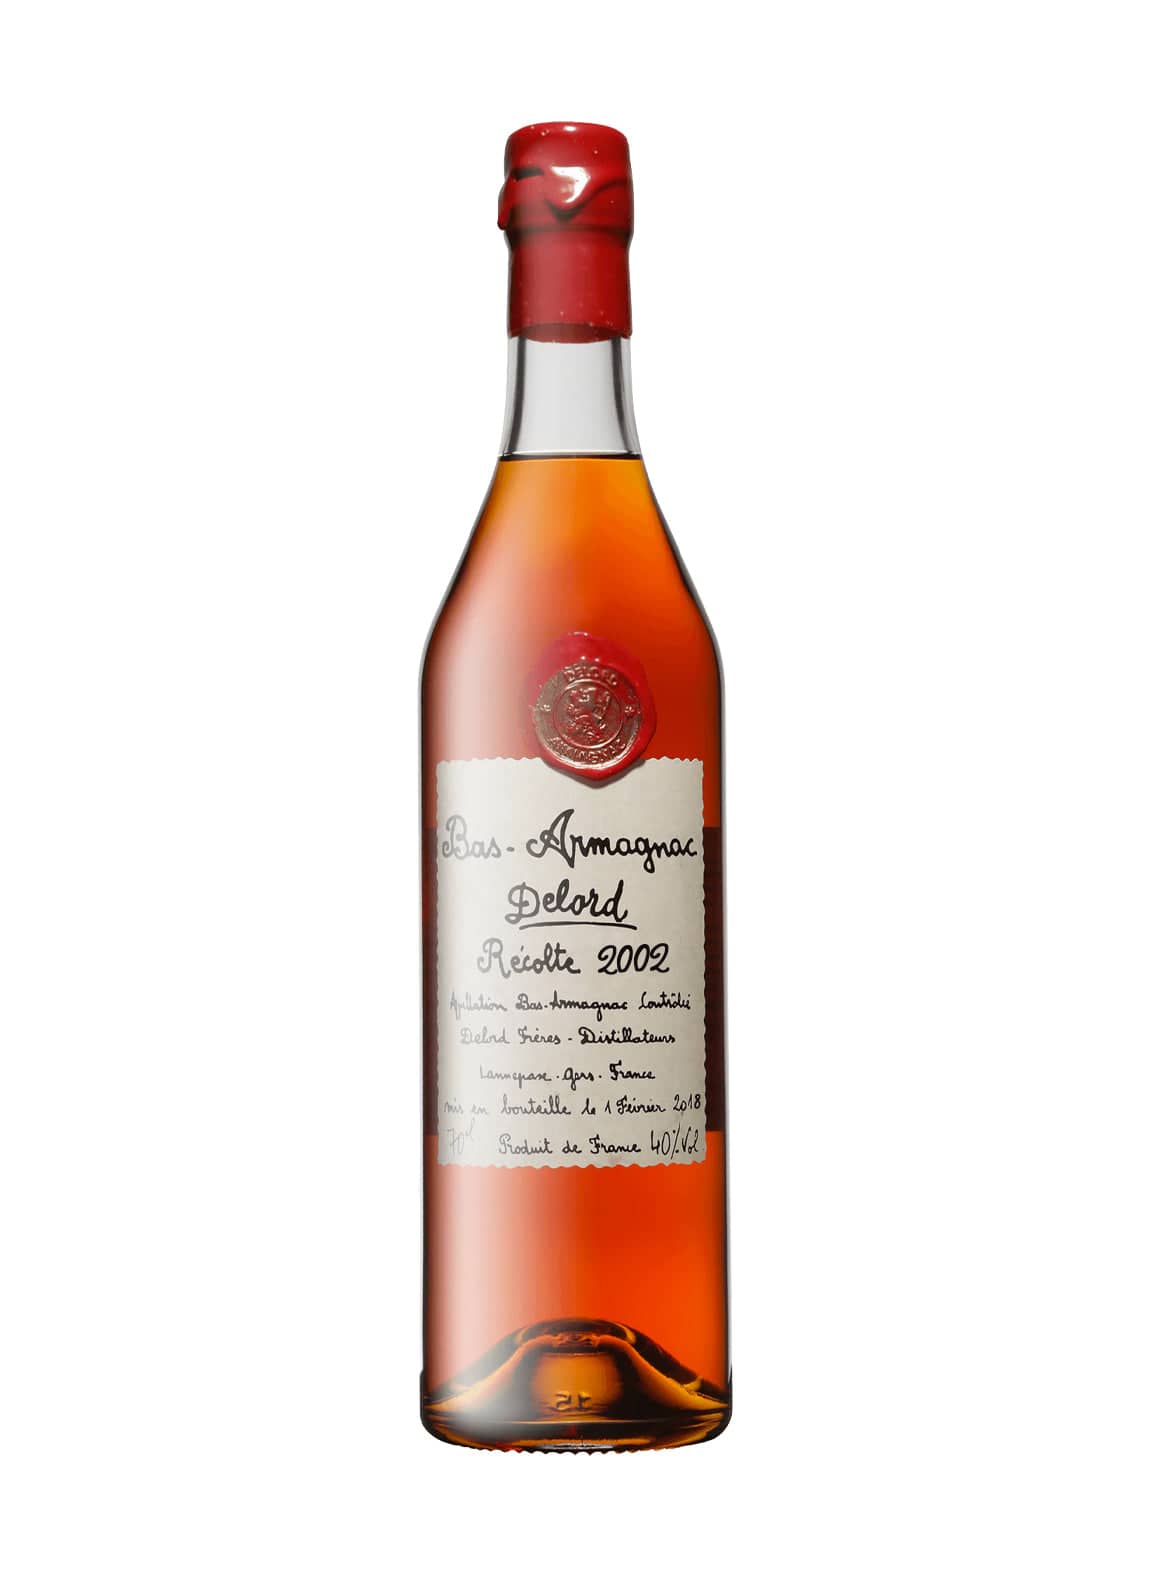 Delord 2002 Bas Armagnac 40% 700ml | Brandy | Shop online at Spirits of France